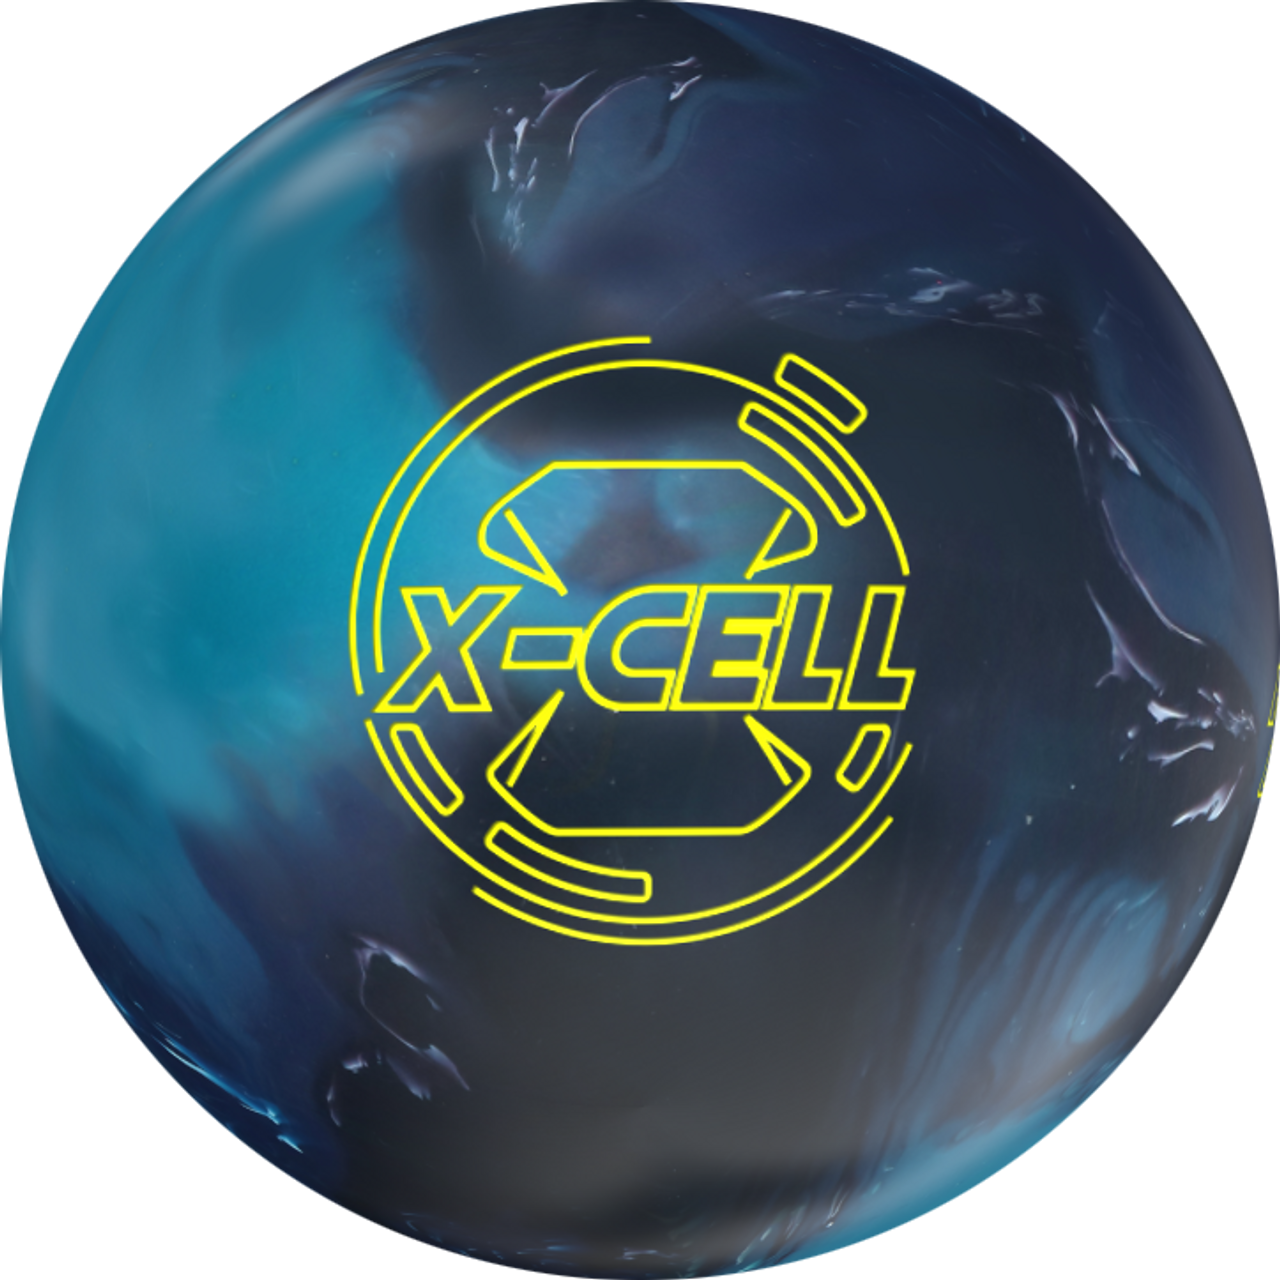 Roto Grip X-Cell Bowling Ball